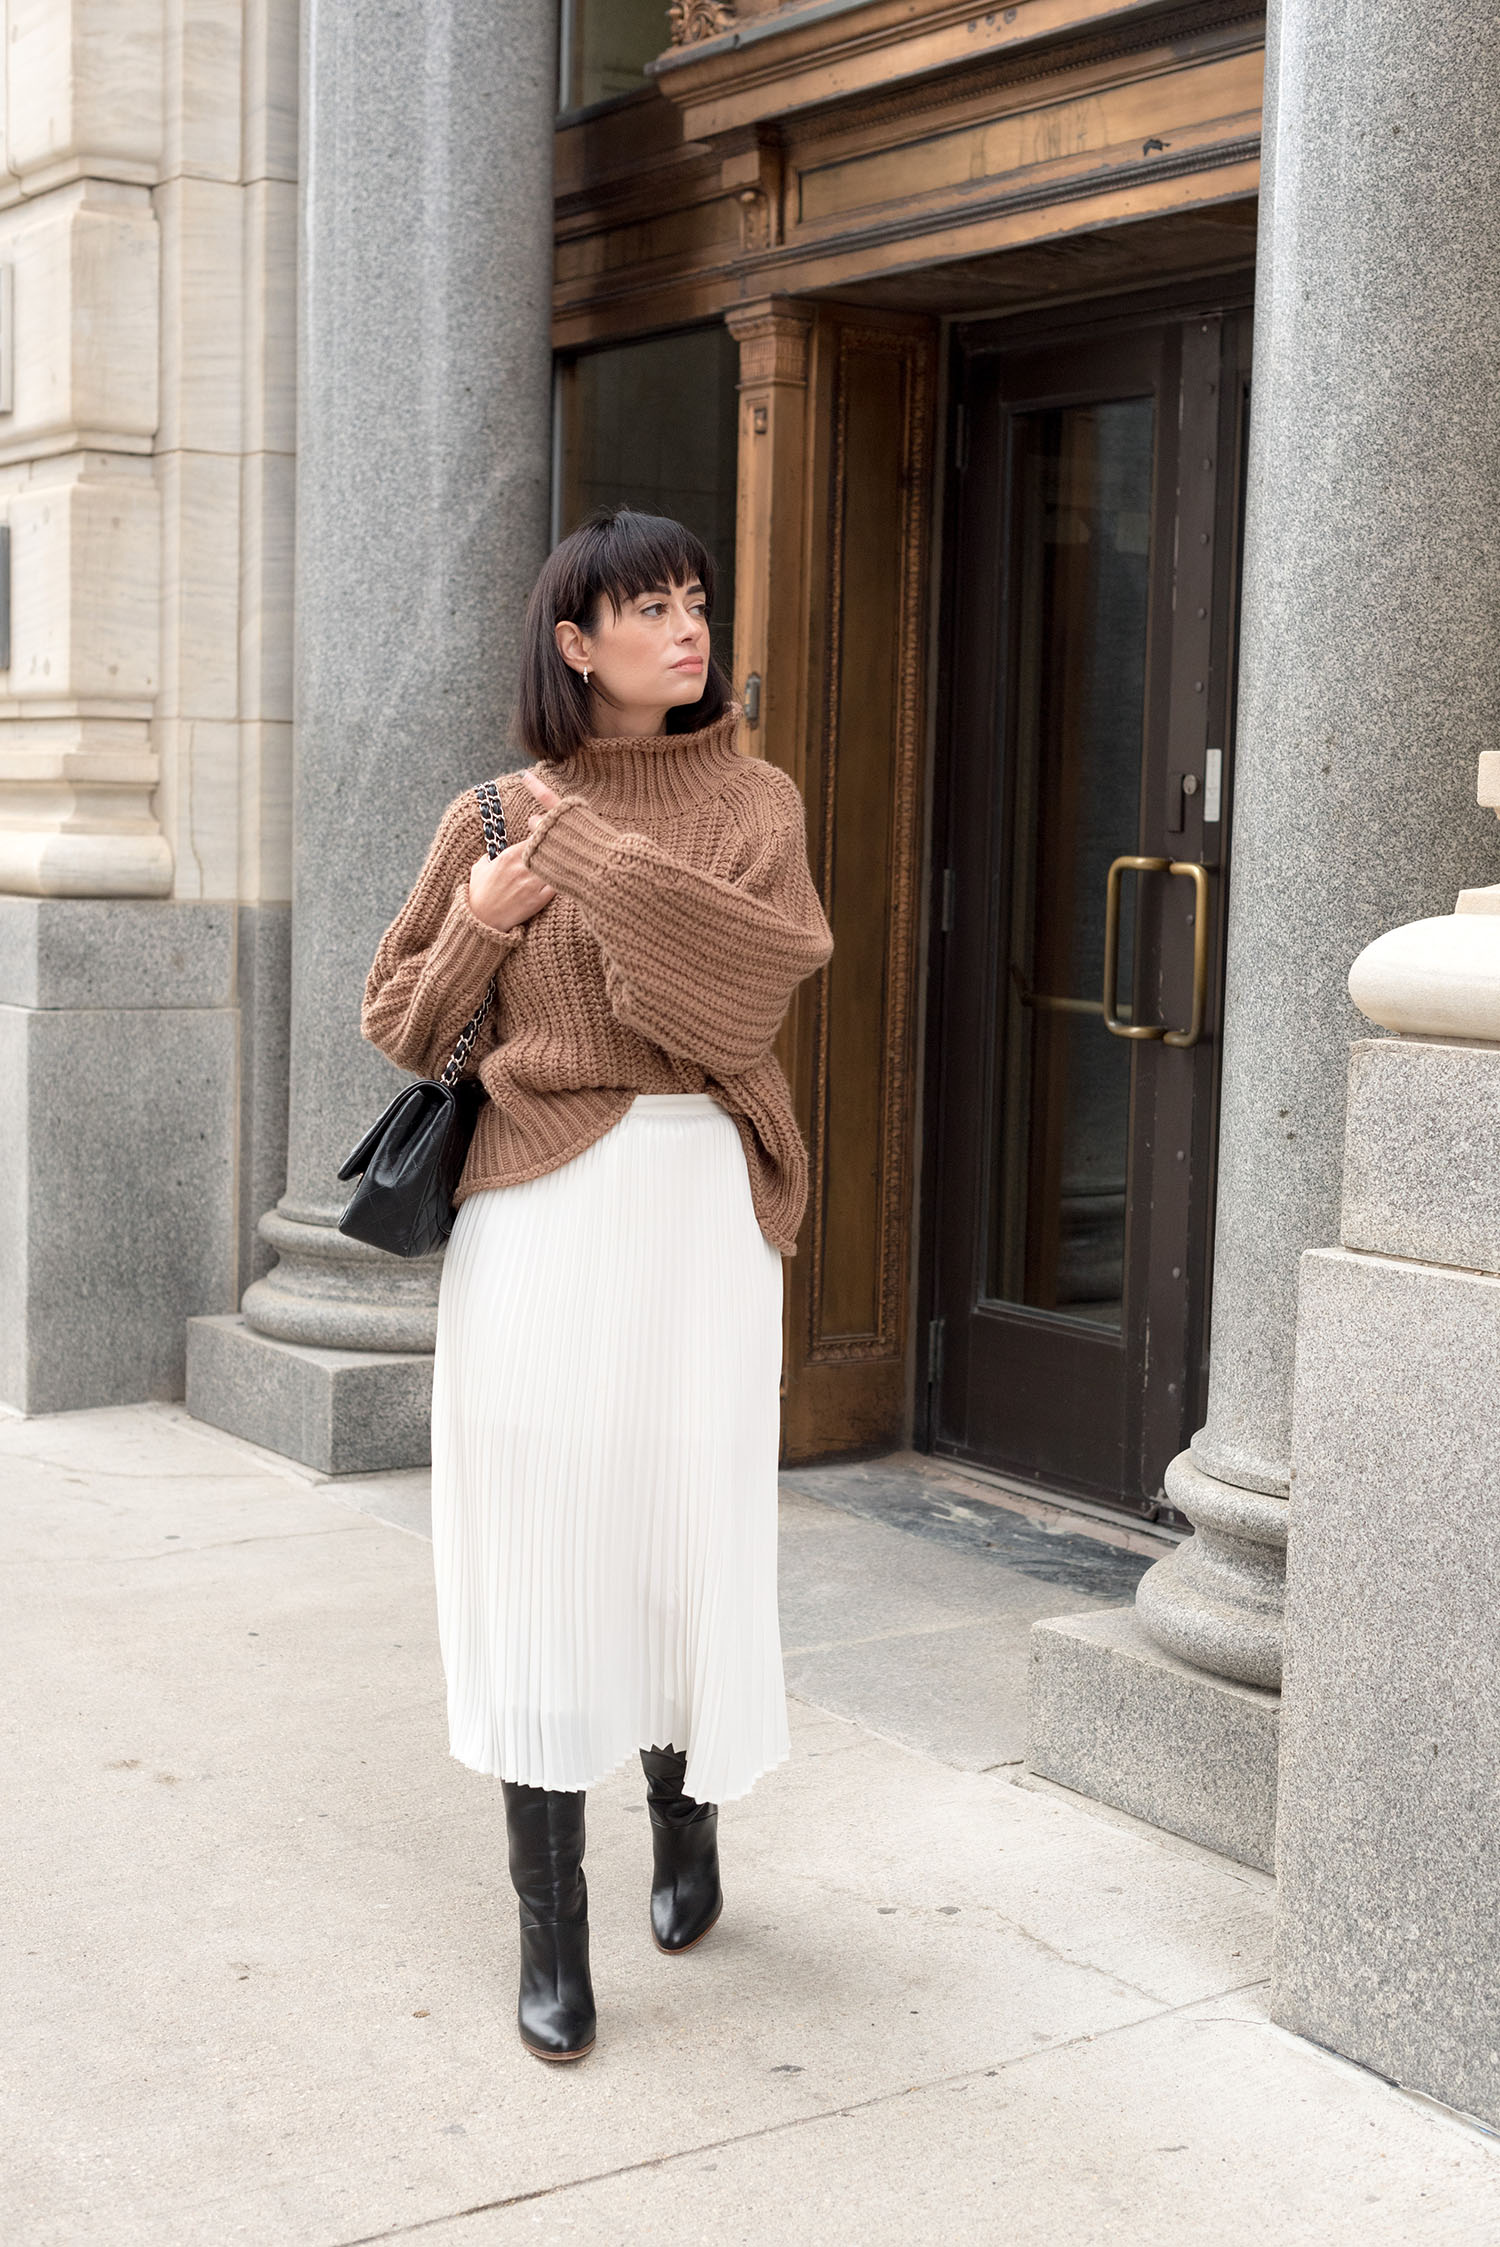 Coco & Vera - H&M sweater, Wilfred skirt, Chanel handbag